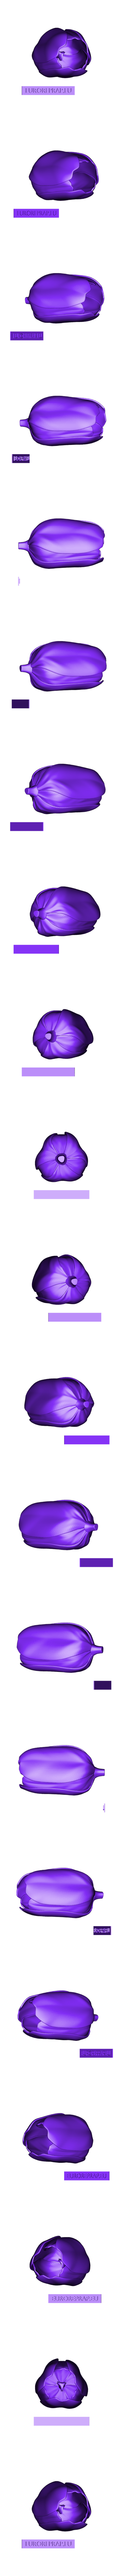 euroreprap_flower-tulip_b.stl Download STL file flowers: Tulip - 3D printable model • 3D printer object, euroreprap_eu